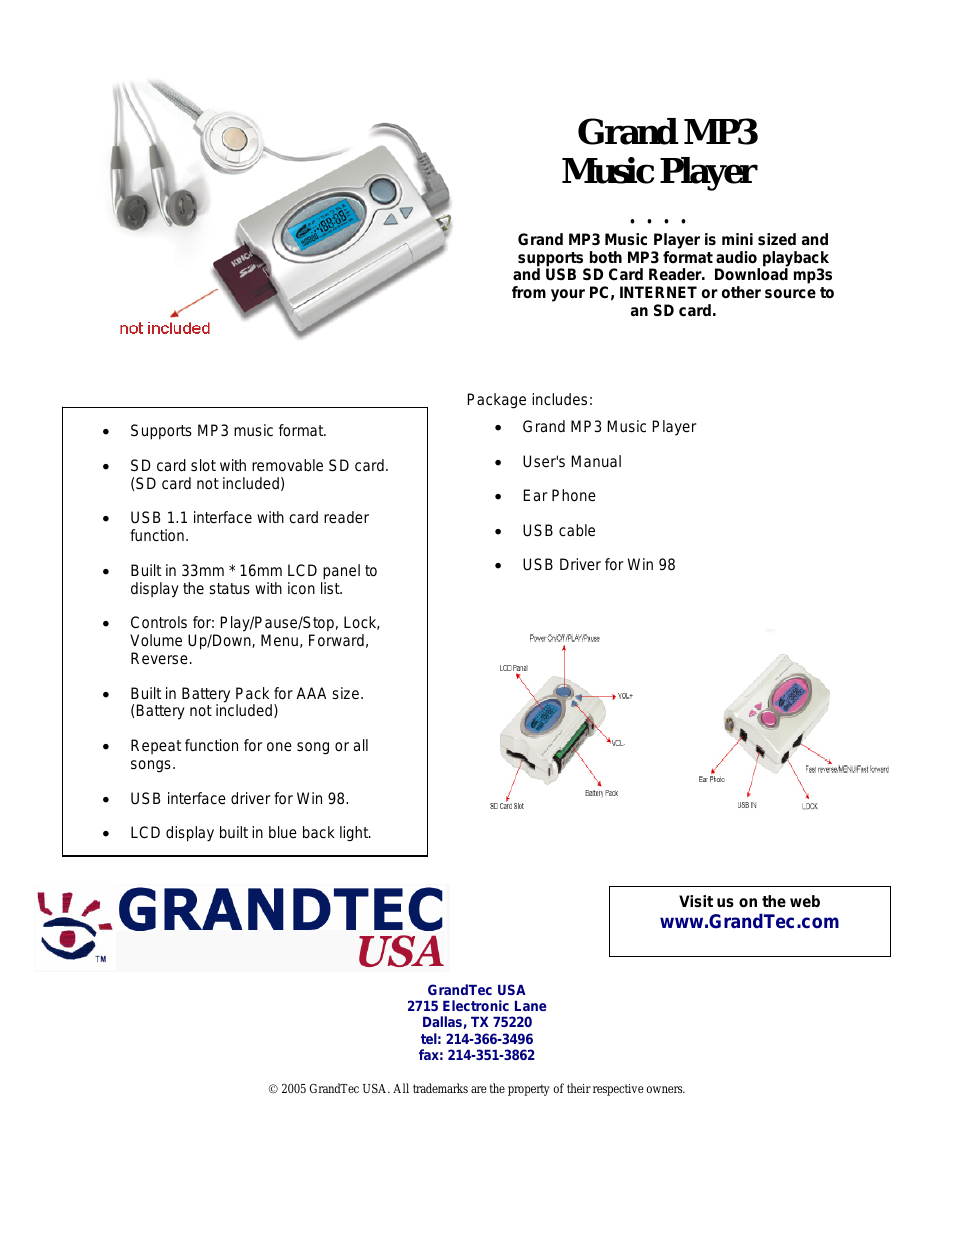 Grand MP3 Music Player